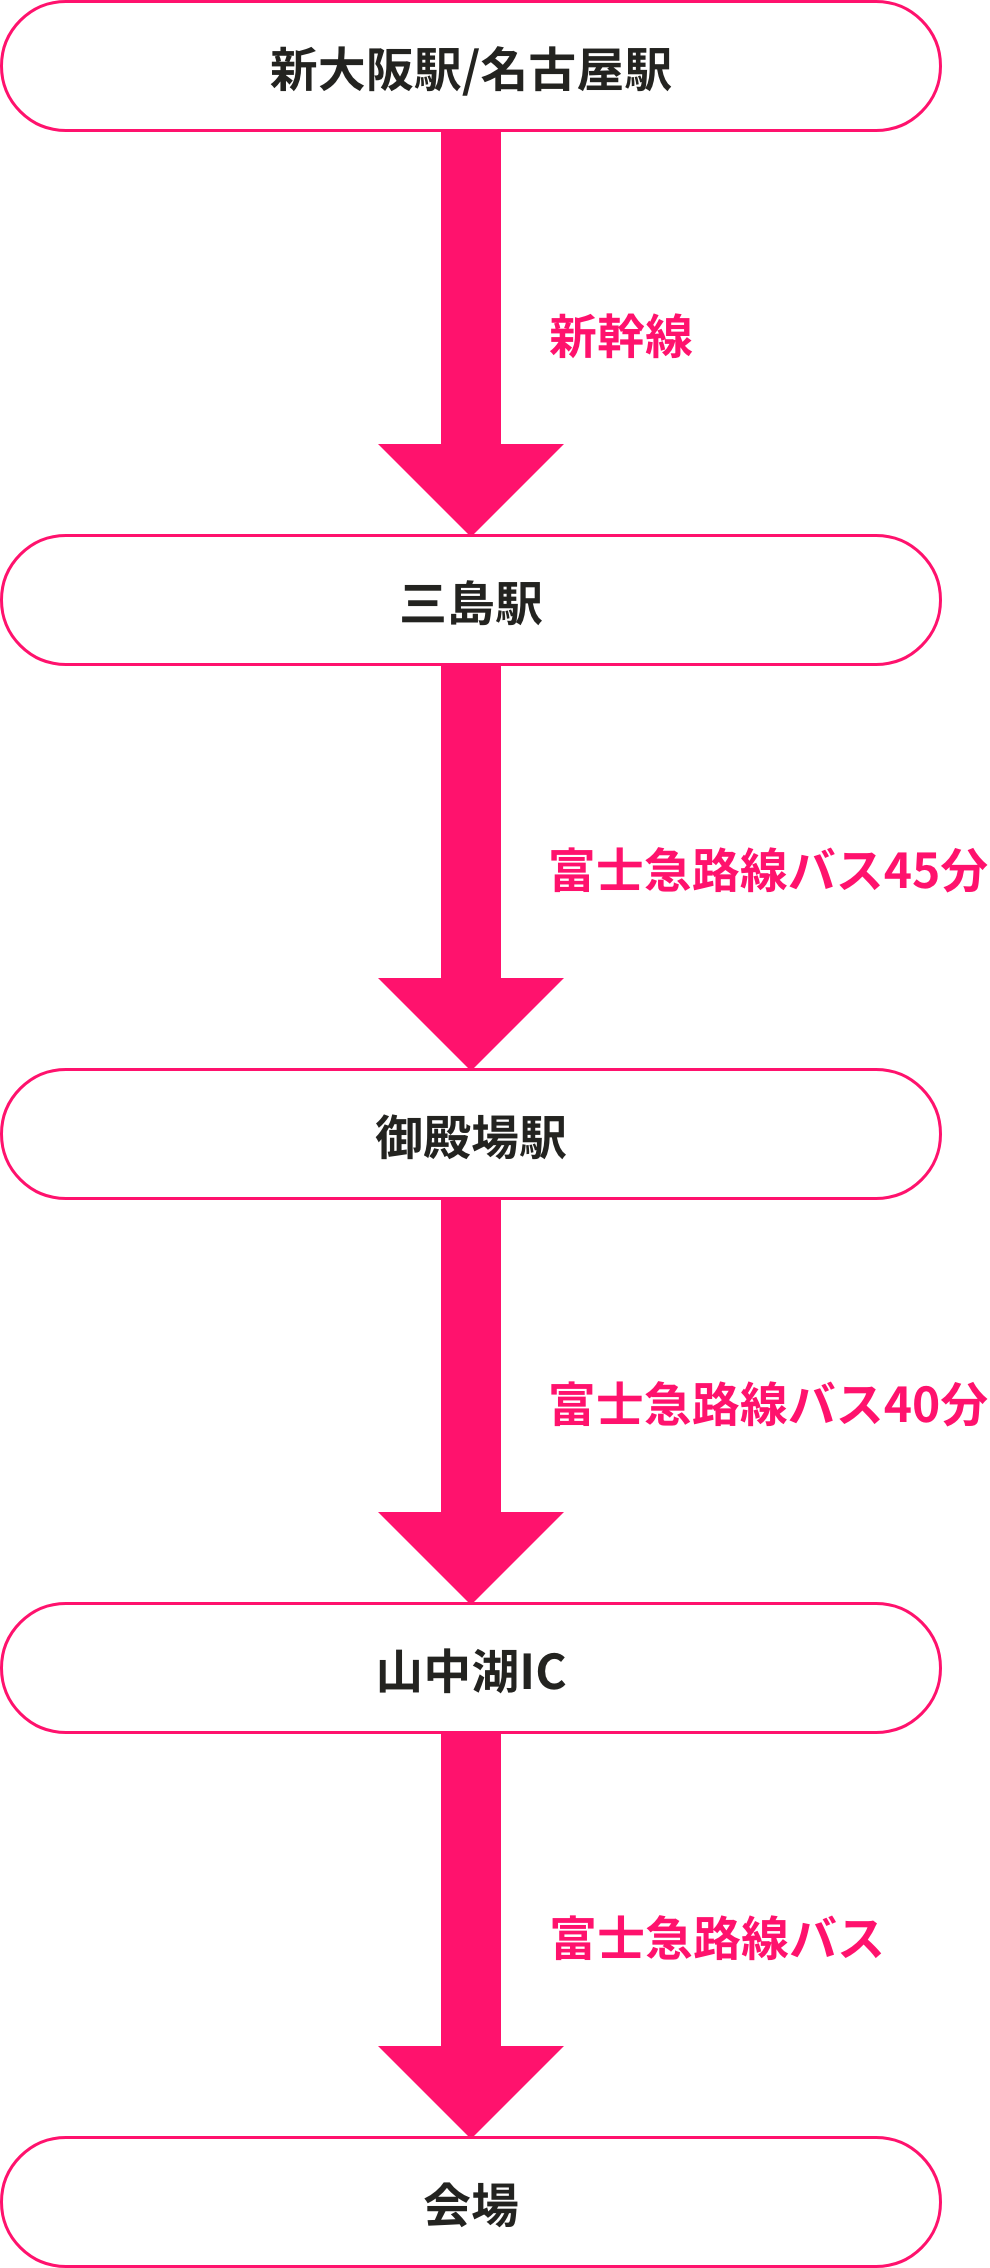 新大阪駅/名古屋駅（新幹線）→三島駅（富士急路線バス45分）→御殿場駅（富士急路線バス40分）→山中湖IC（無料シャトルバス）→会場